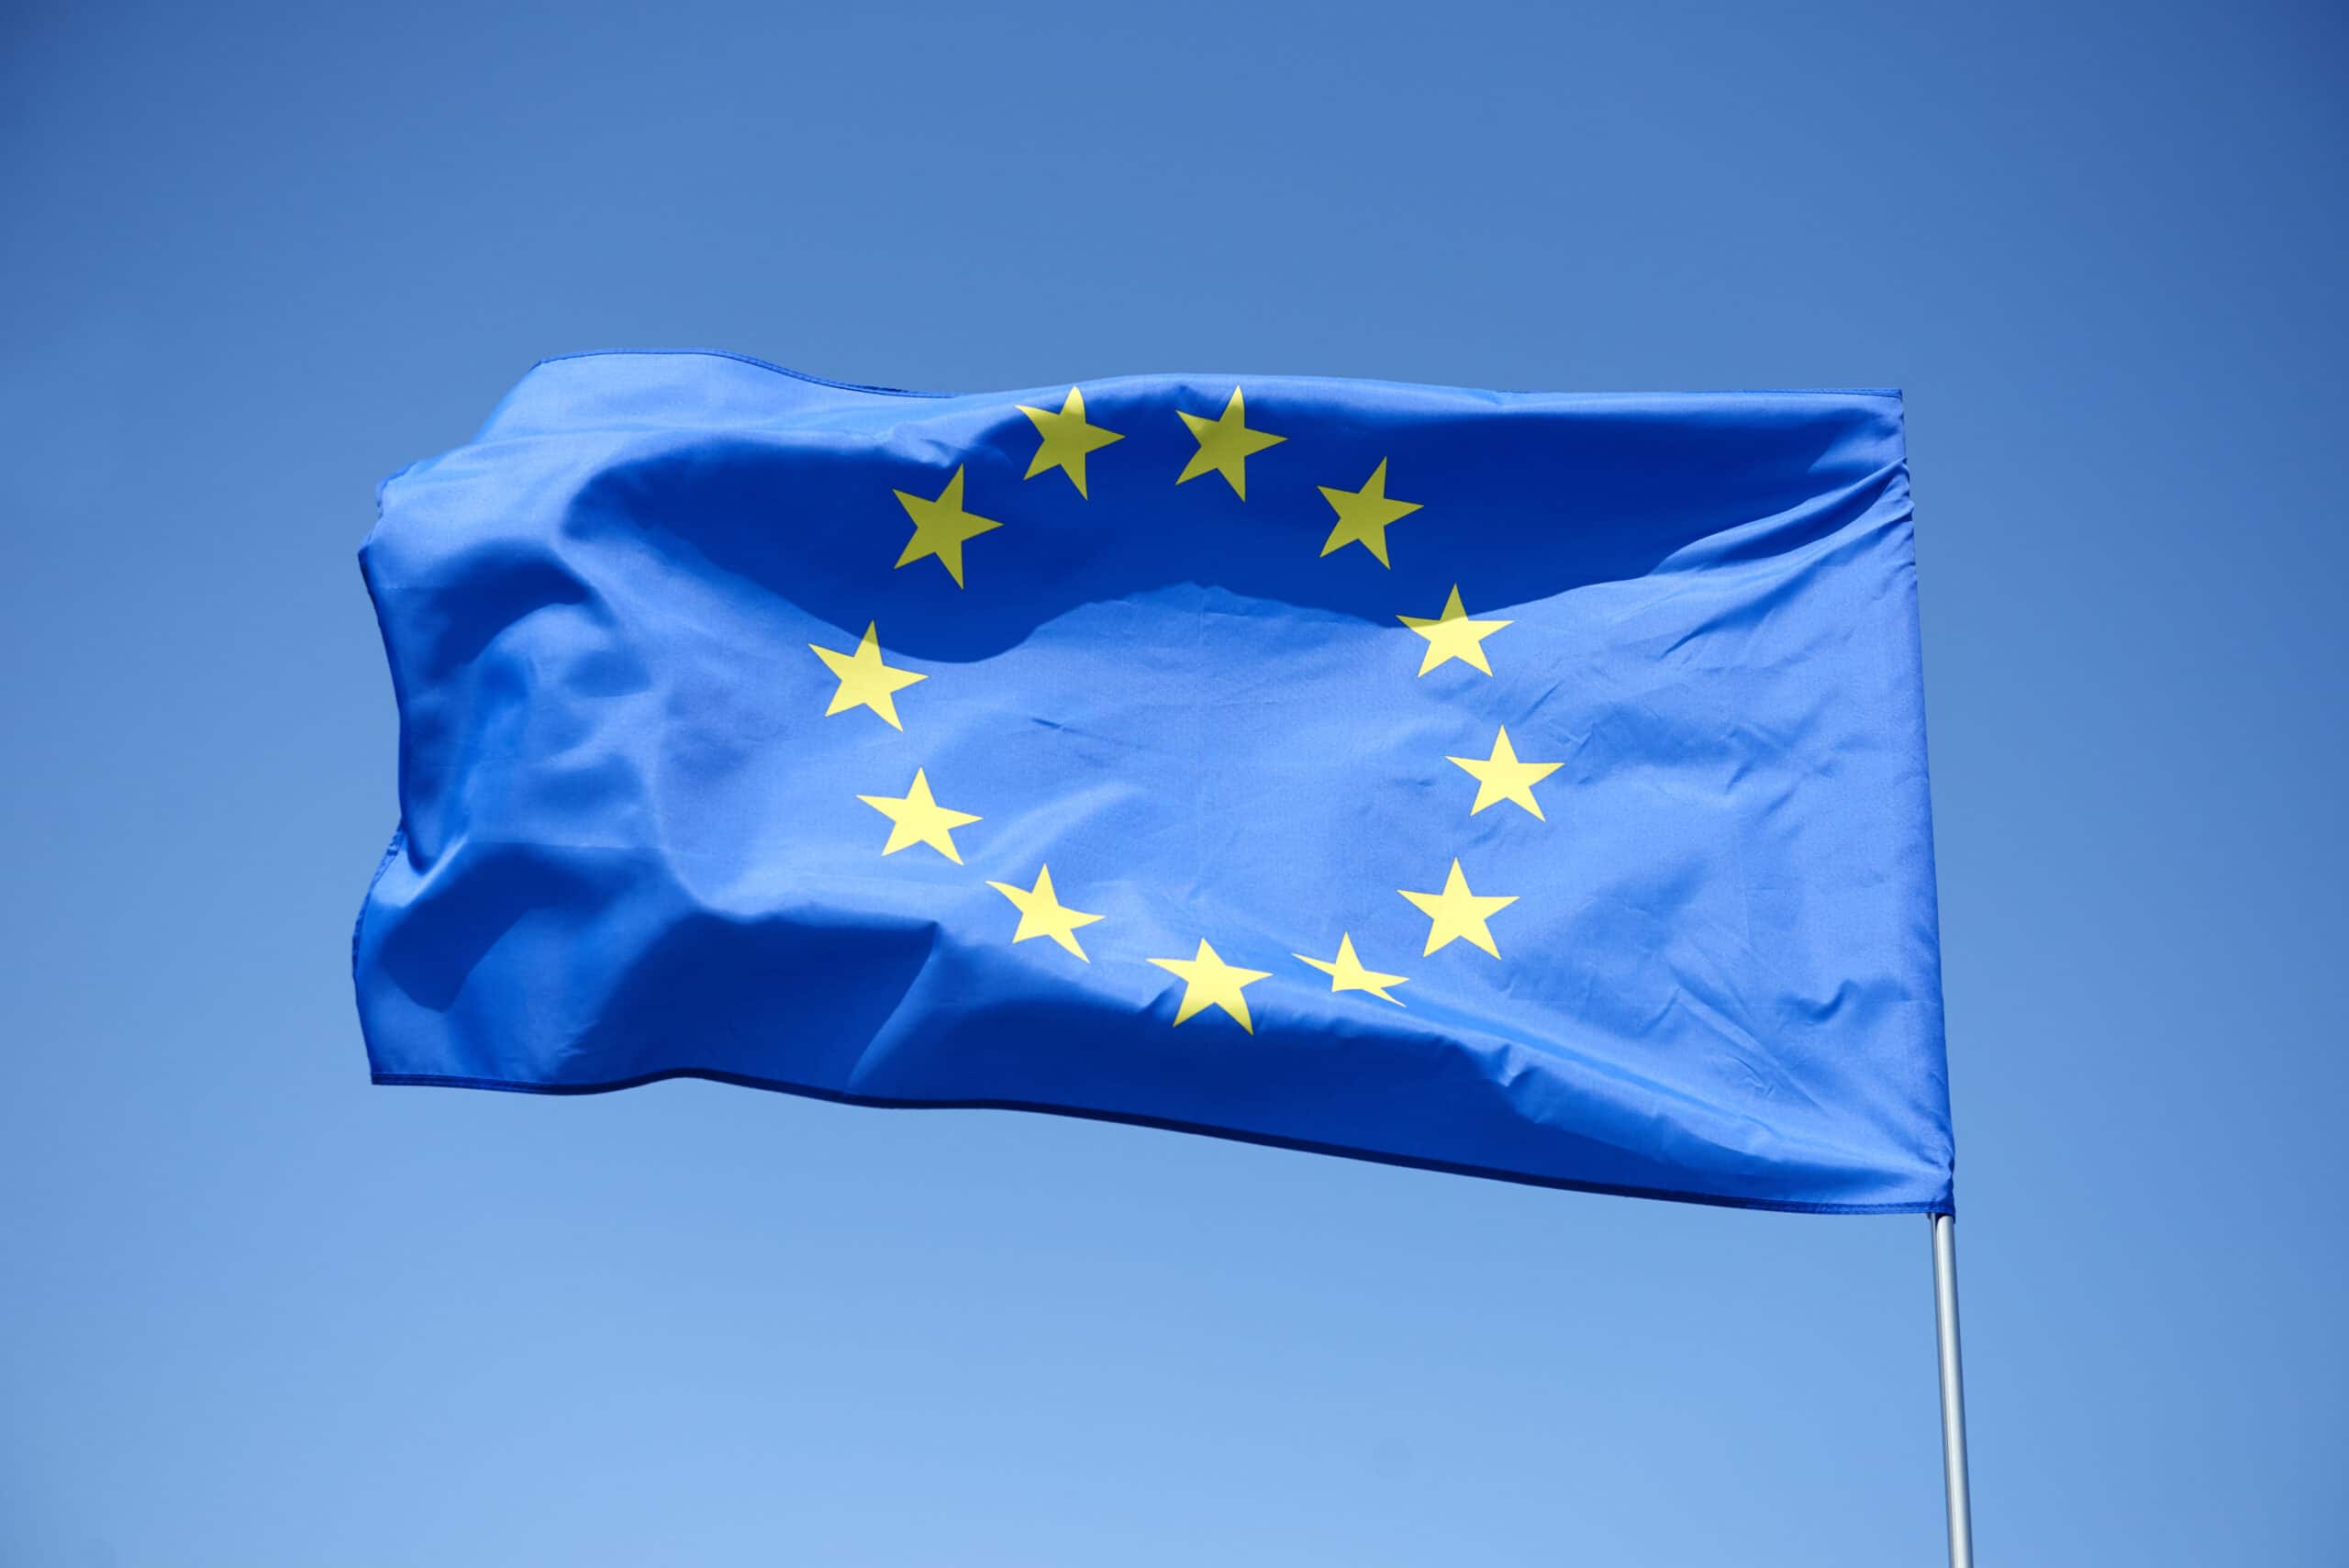 European Union flag on the blue background